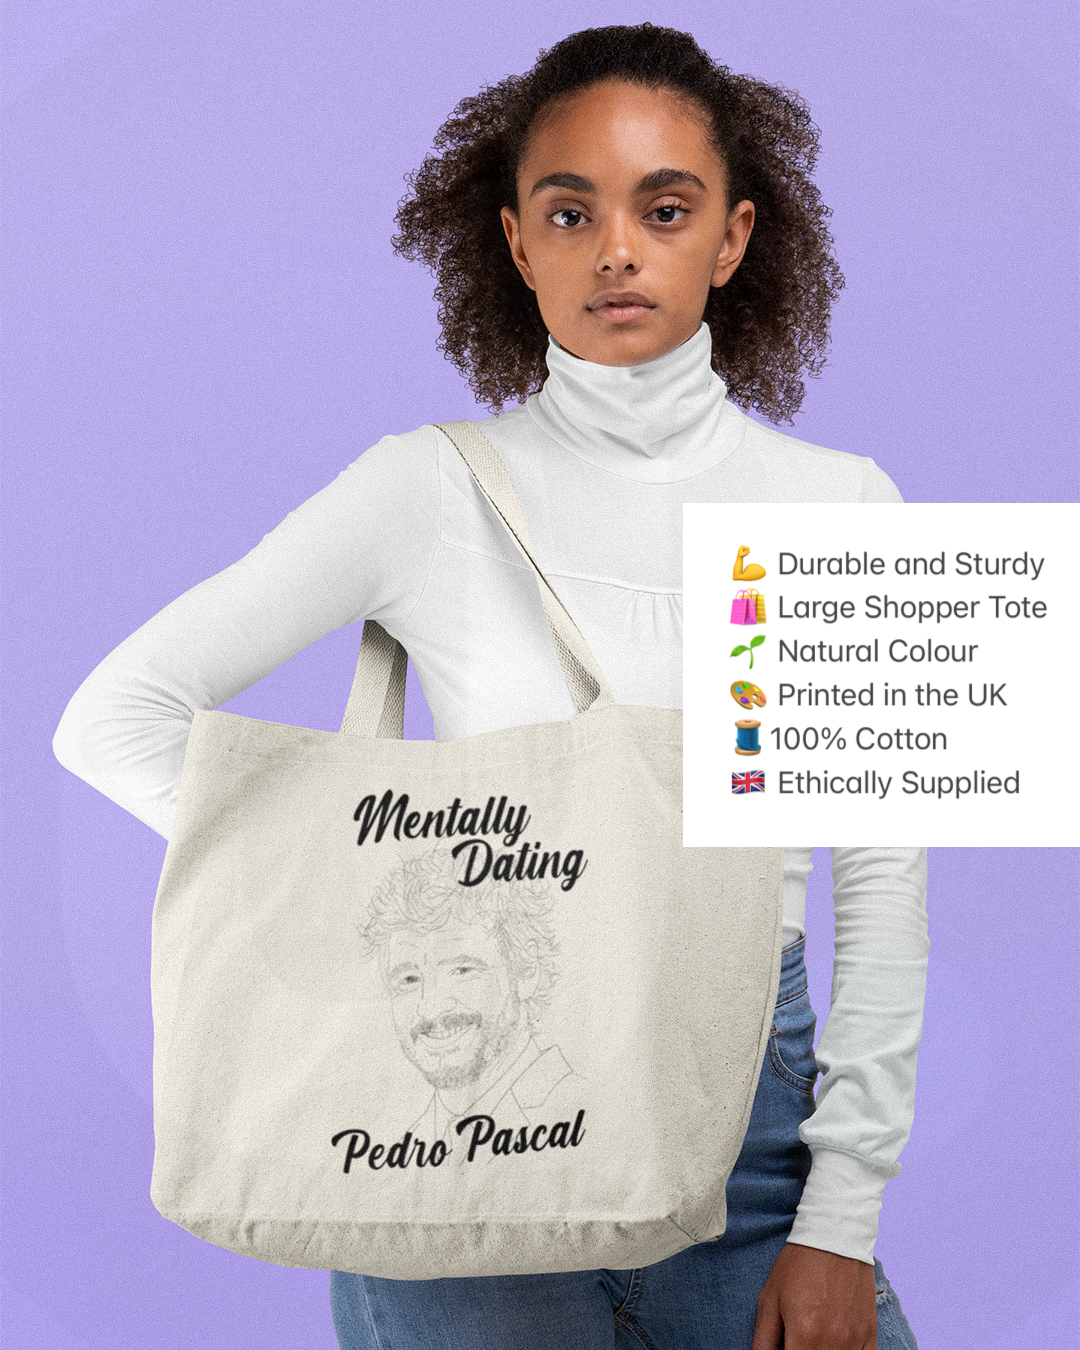 Mentally Dating Pedro Pascal Tote Bag Shopper - Mentally Dating Pedro Pascal Tote Bag - Daddy Pedro Pascal Shopper Tote Bag - Pedro Pascal The Last Of Us Inspired Tote Bag